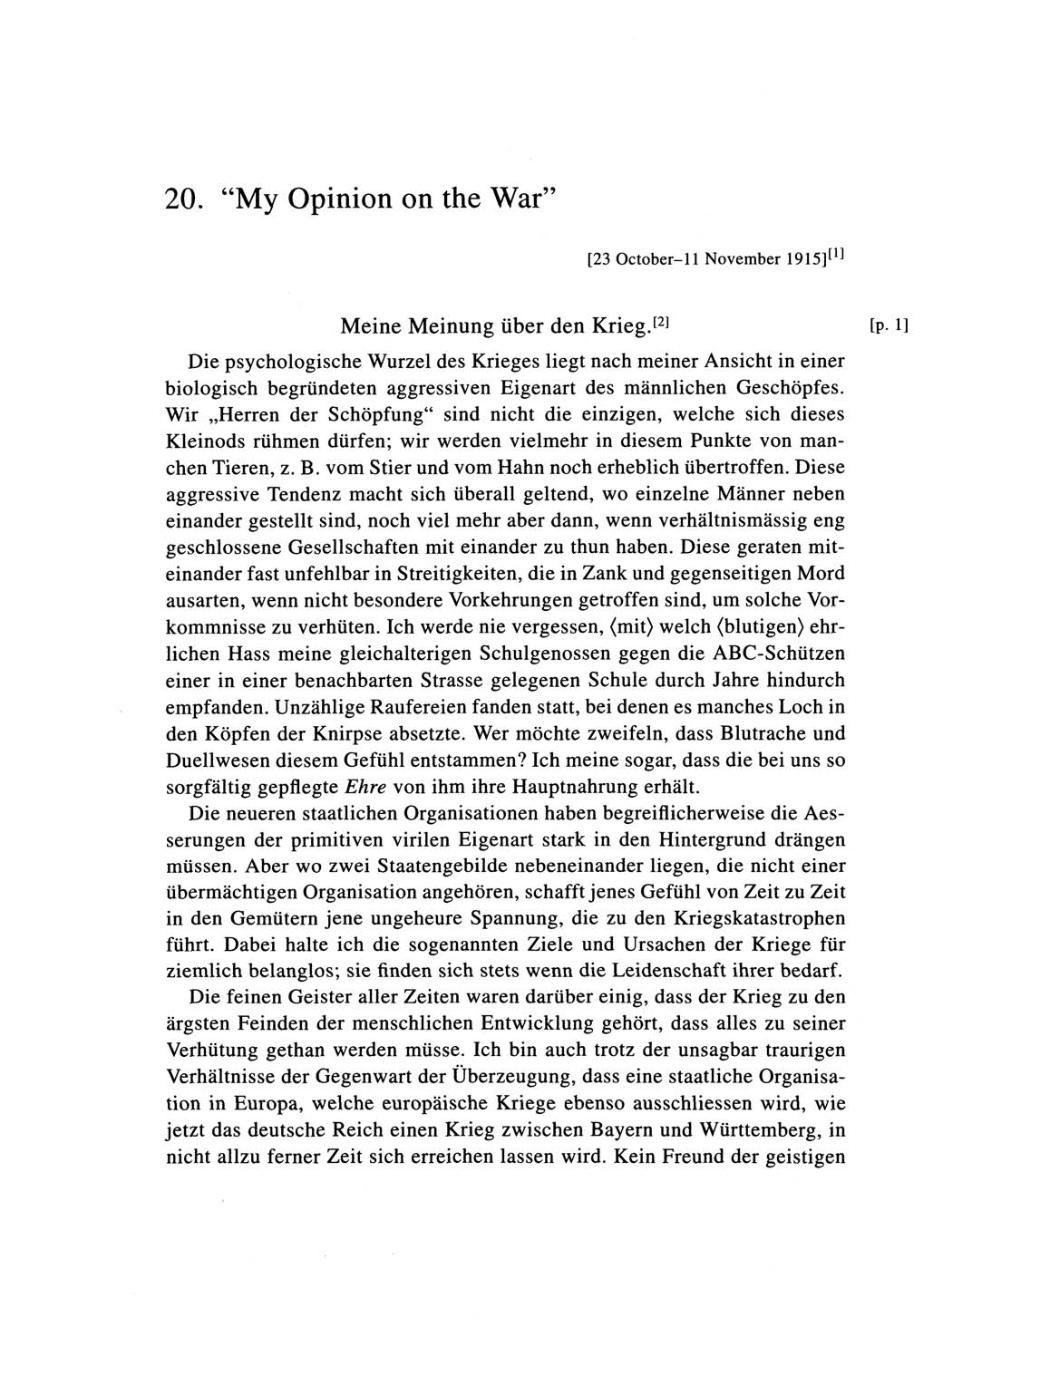 Volume 6: The Berlin Years: Writings, 1914-1917 page 211